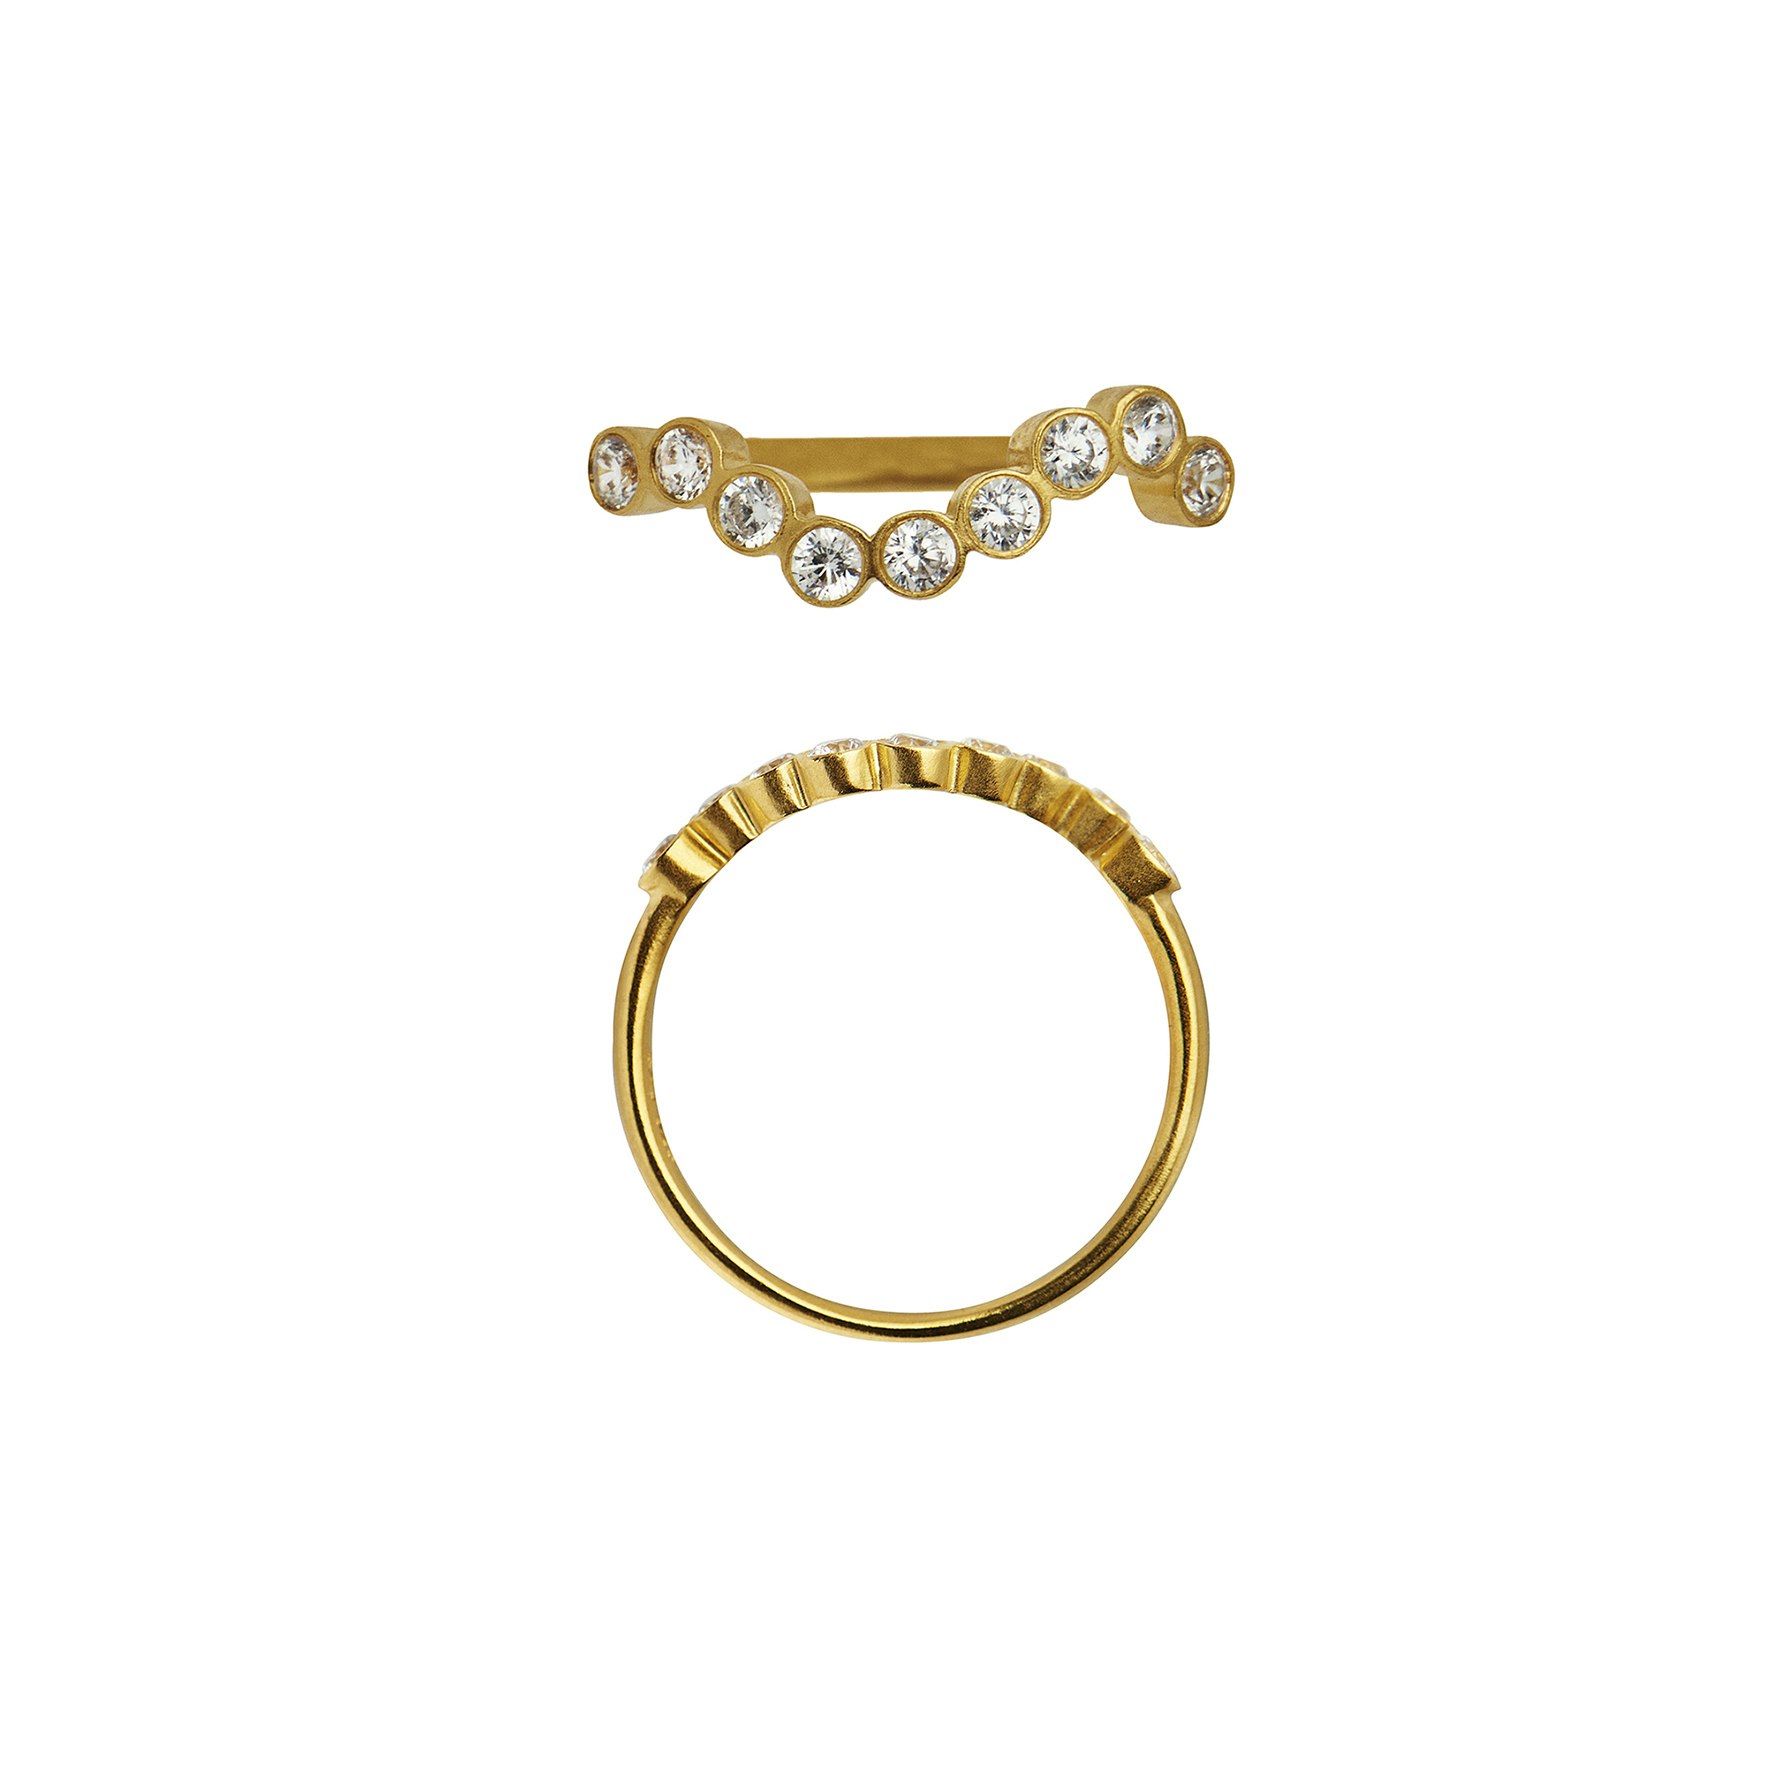 Midnight Sparkle Ring fra STINE A Jewelry i Forgyldt-Sølv Sterling 925